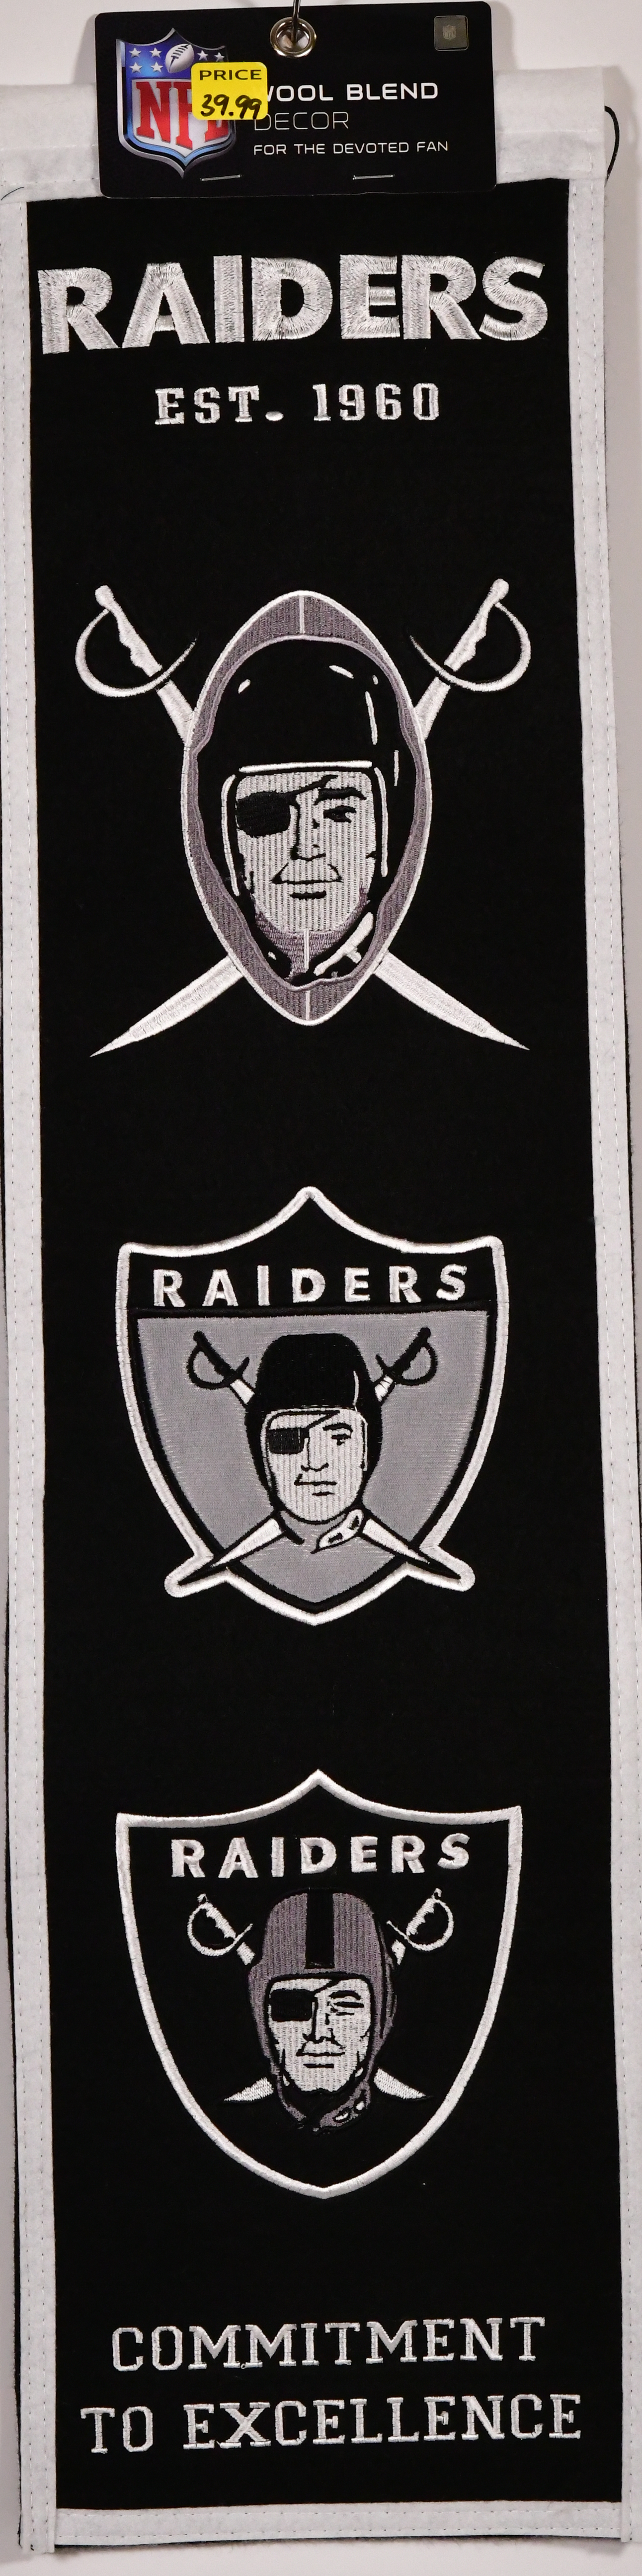 Officially Licensed NFL 23 Felt Wall Banner - Las Vegas Raiders